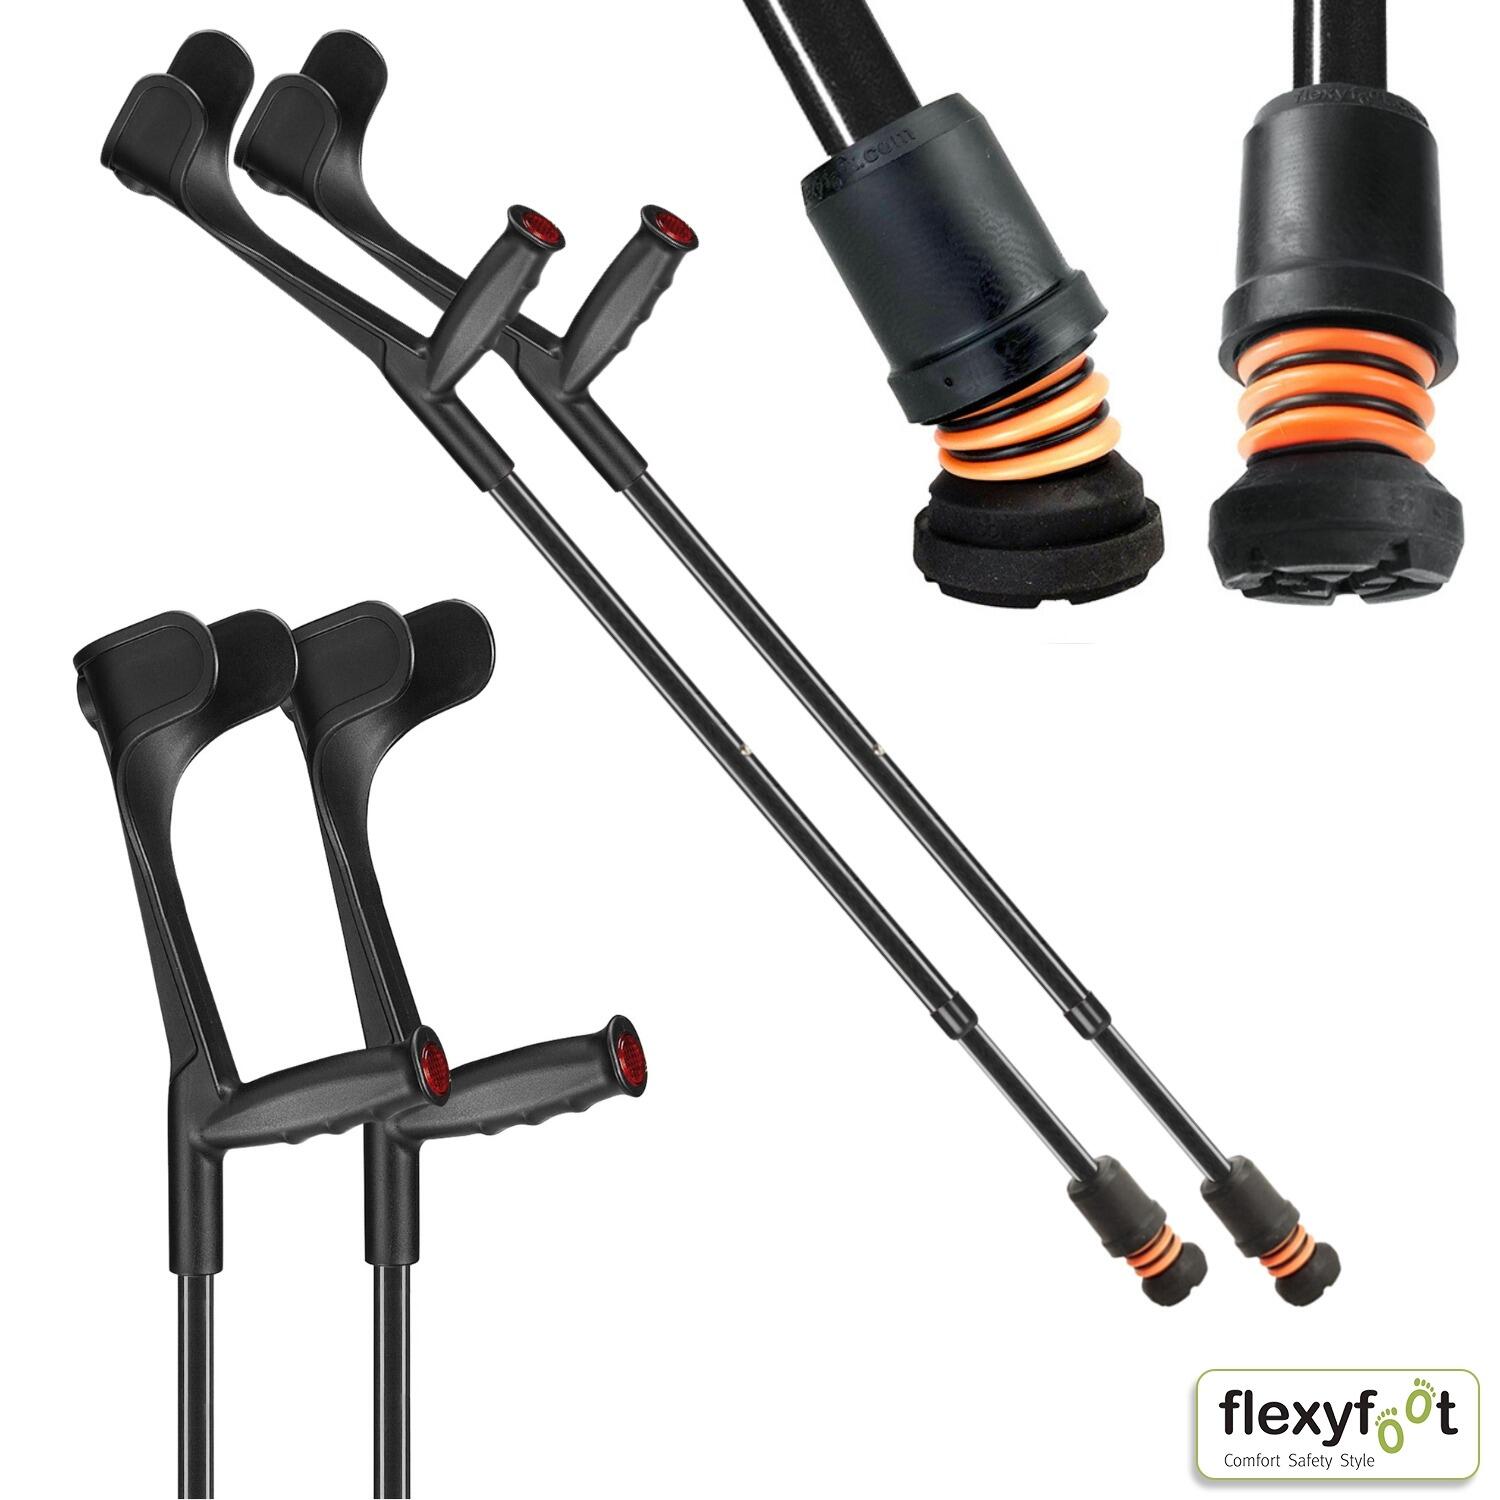 A pair of black Flexyfoot Soft Grip Open Cuff Crutches